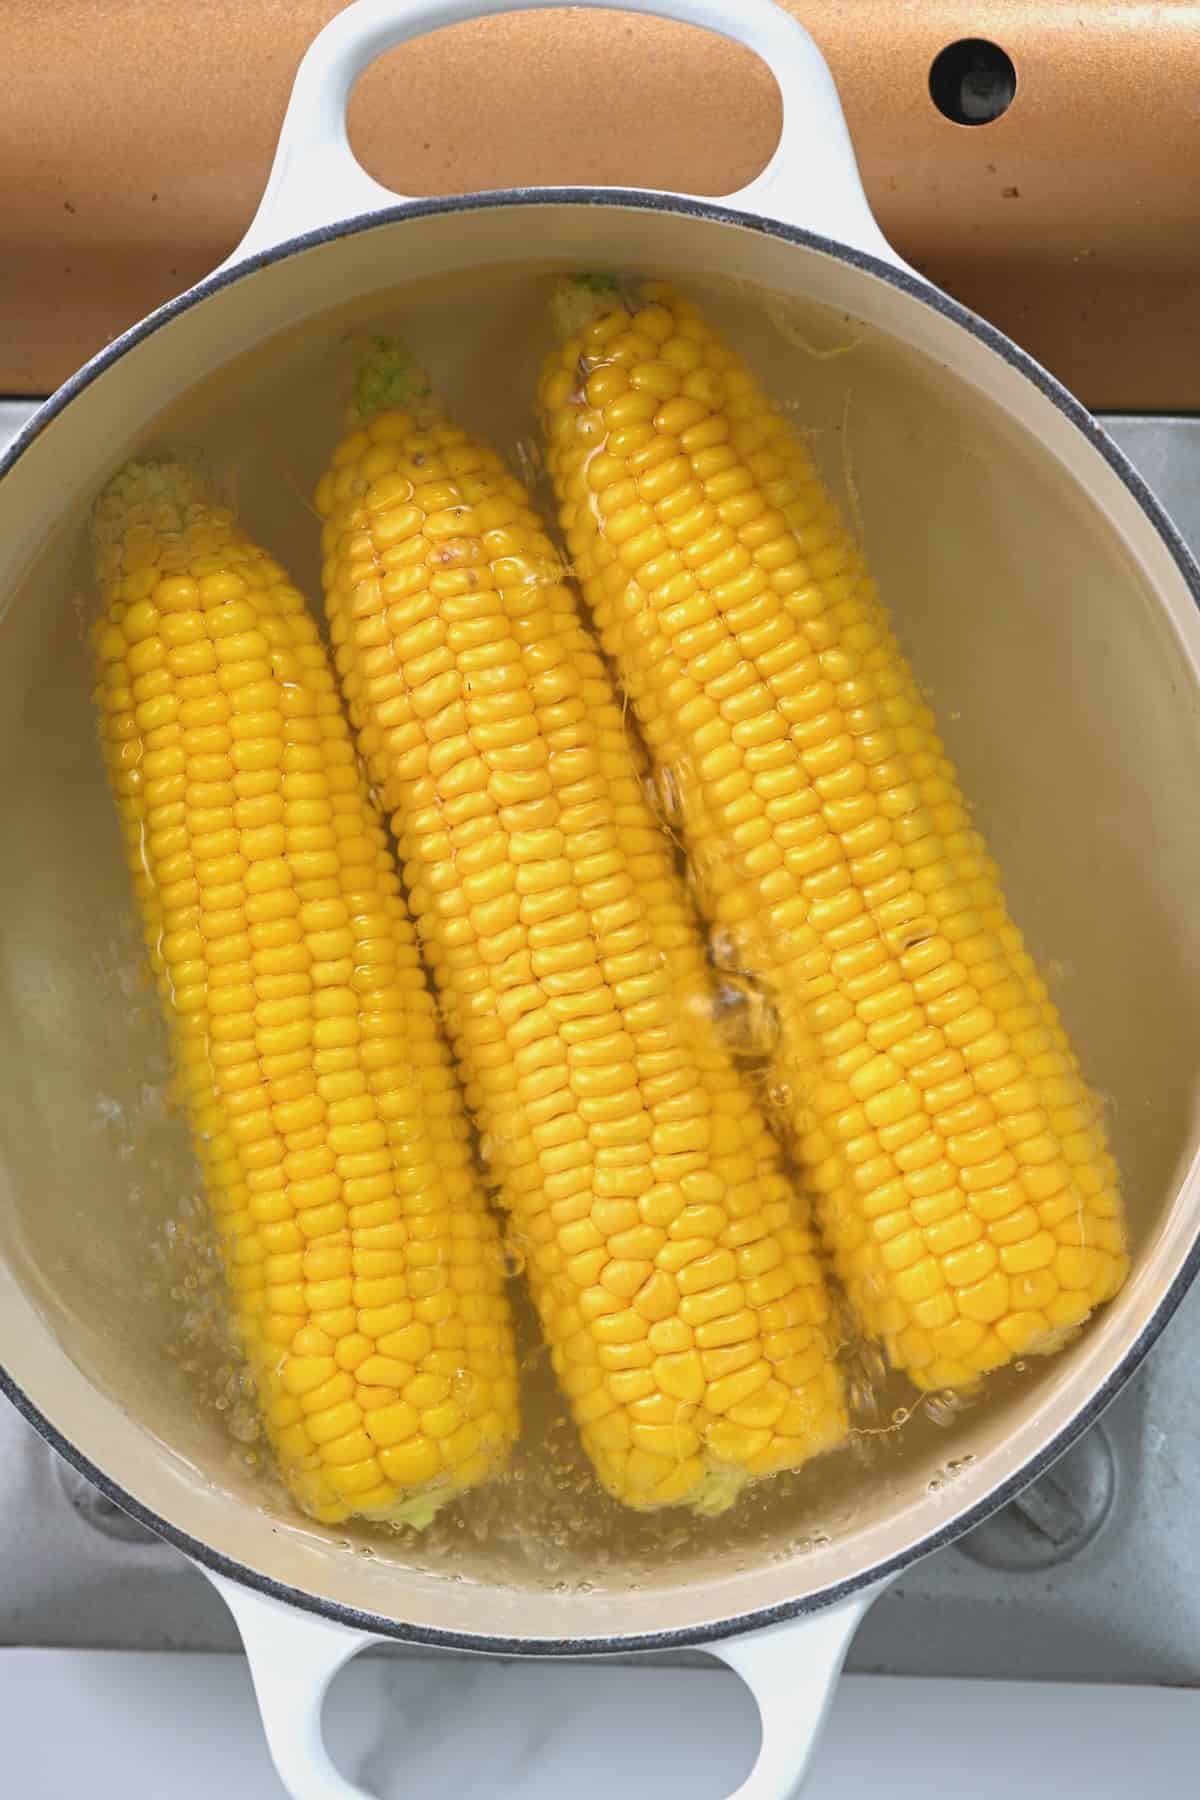 Boiling corn on the cob